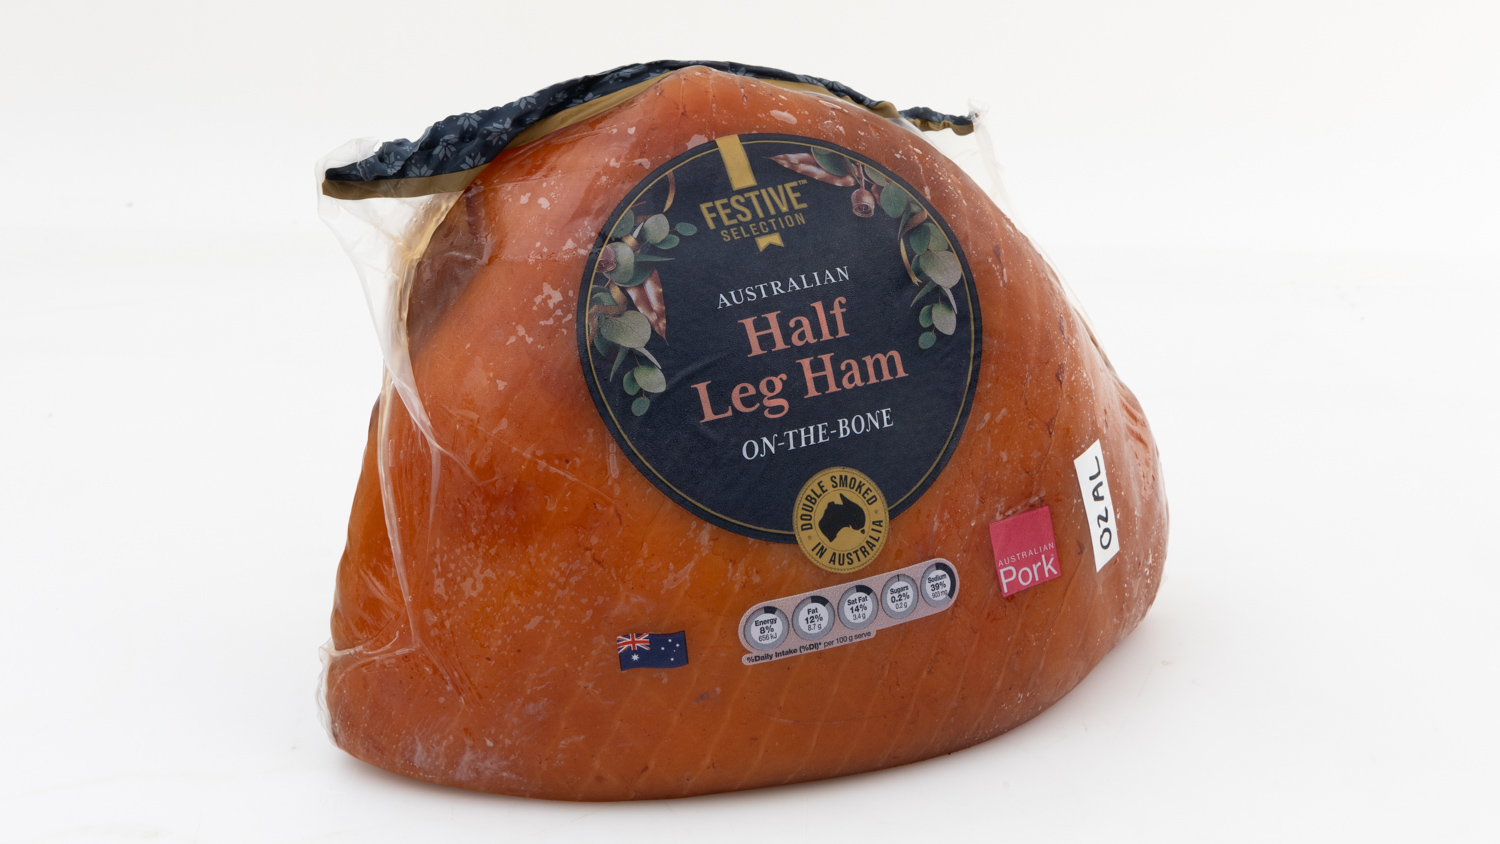 Aldi Festive Selection Australian Half Leg Ham On The Bone carousel image